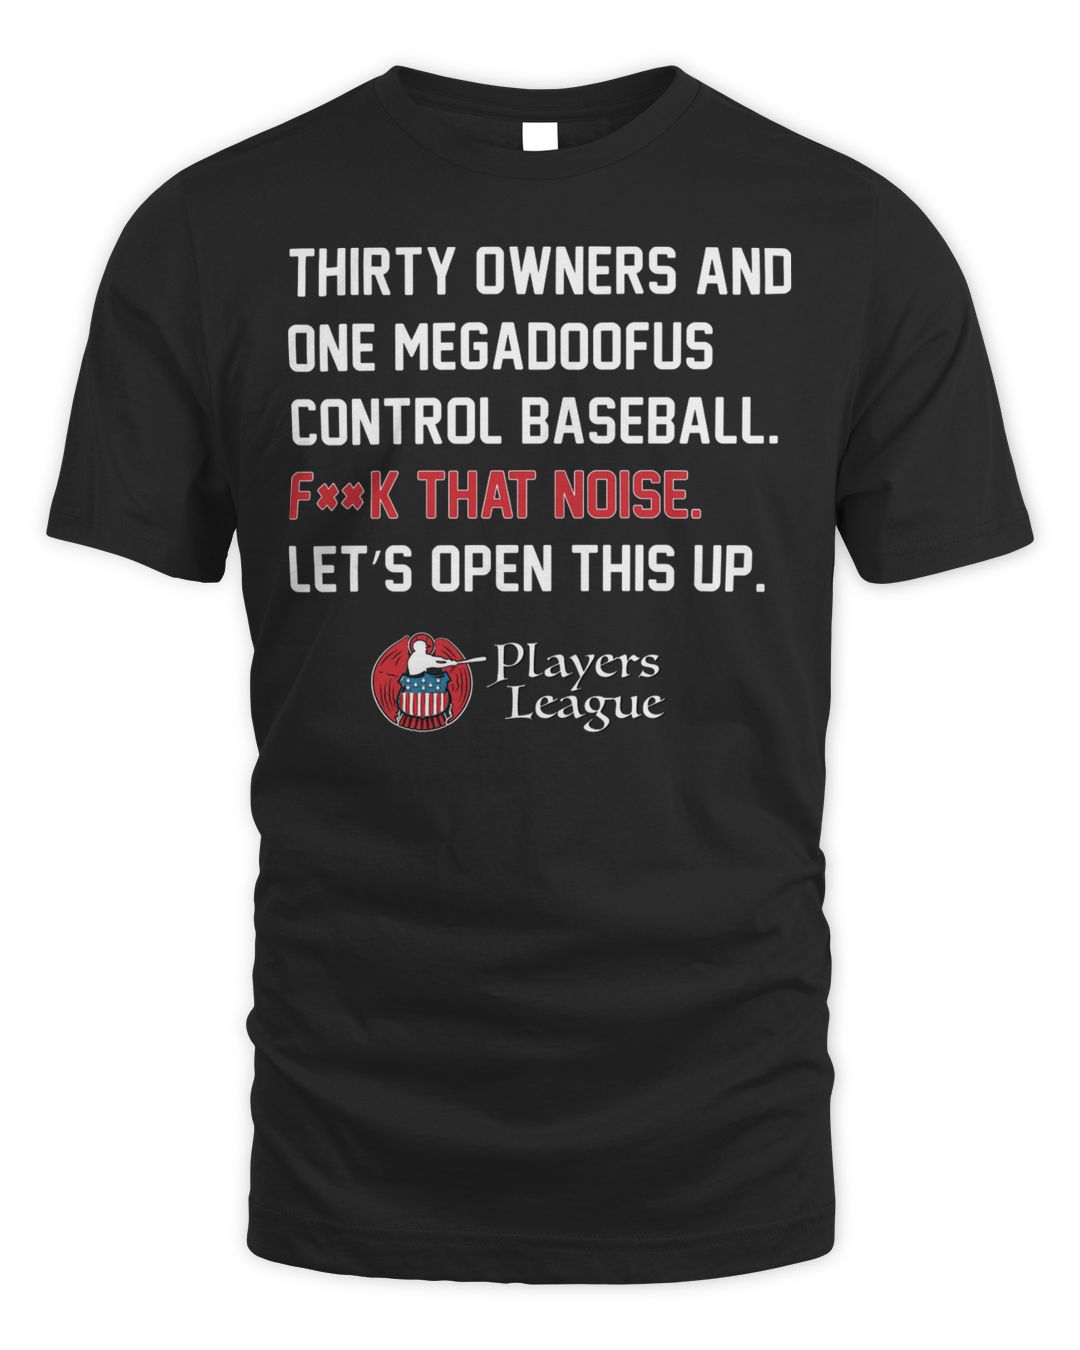 Players League Manfred’s a Doofus Edition Shirt